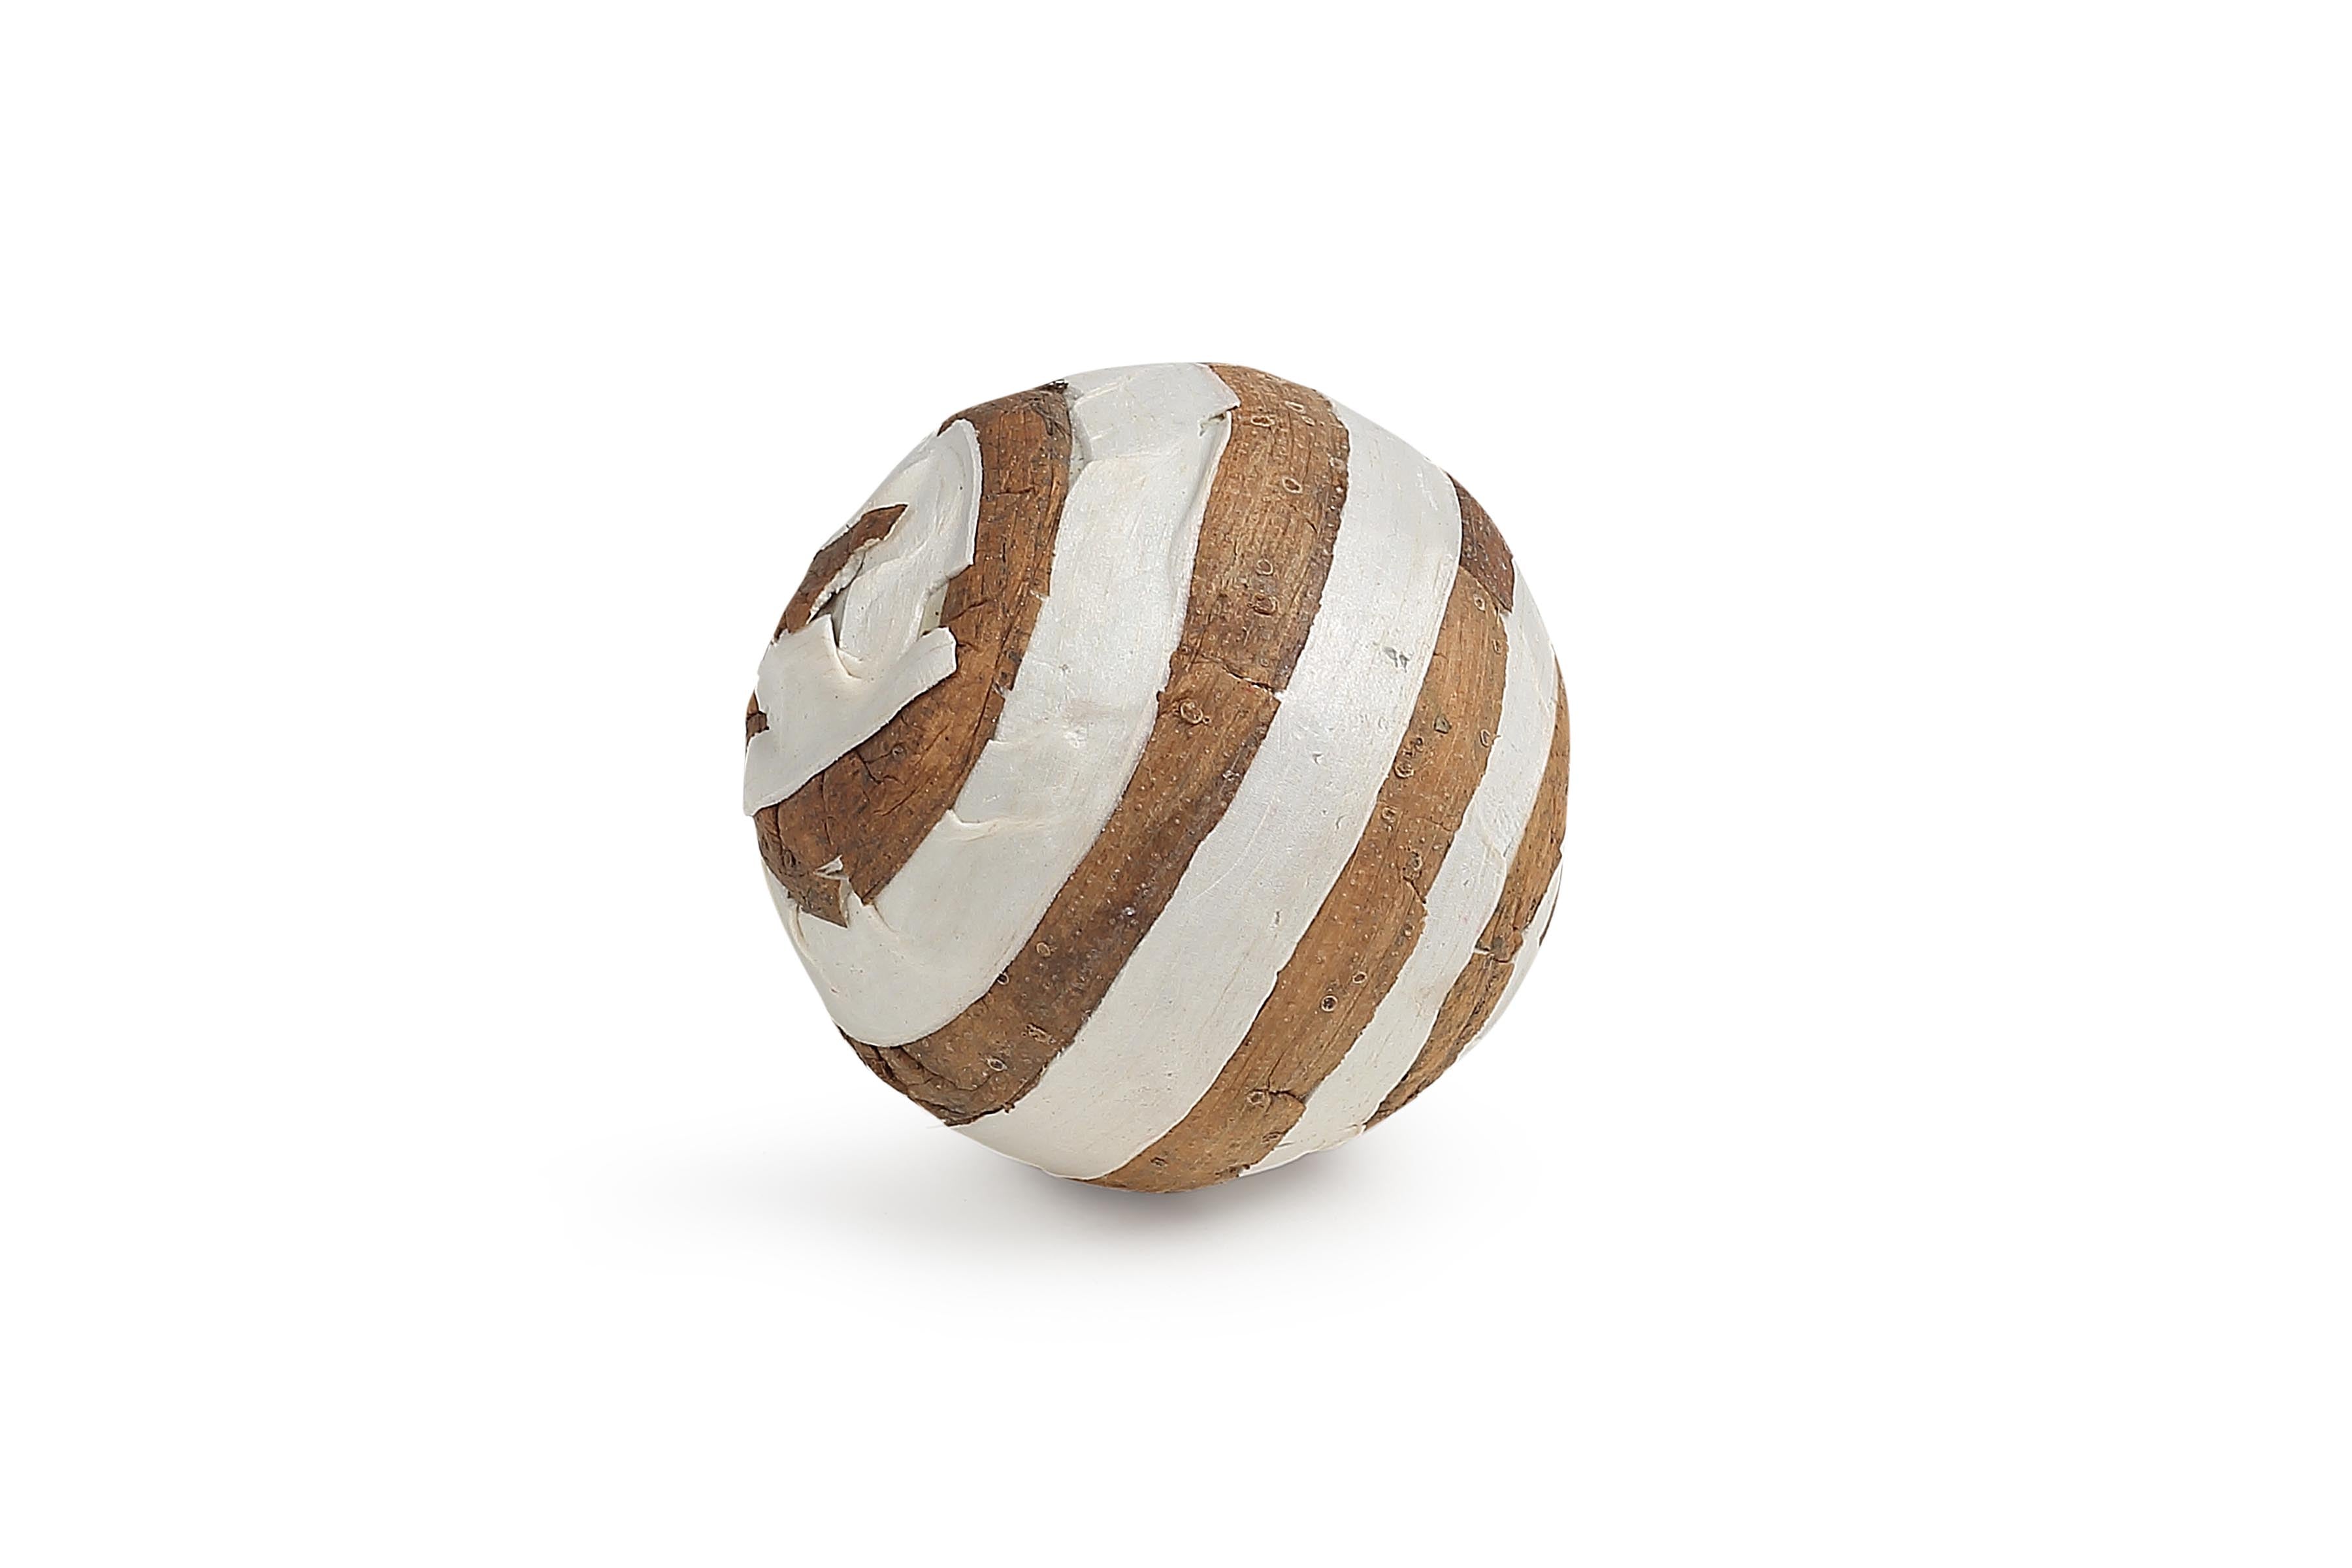 Boho Decor Sola Wood Zebra Balls Set of 6 - Dia 10 inch